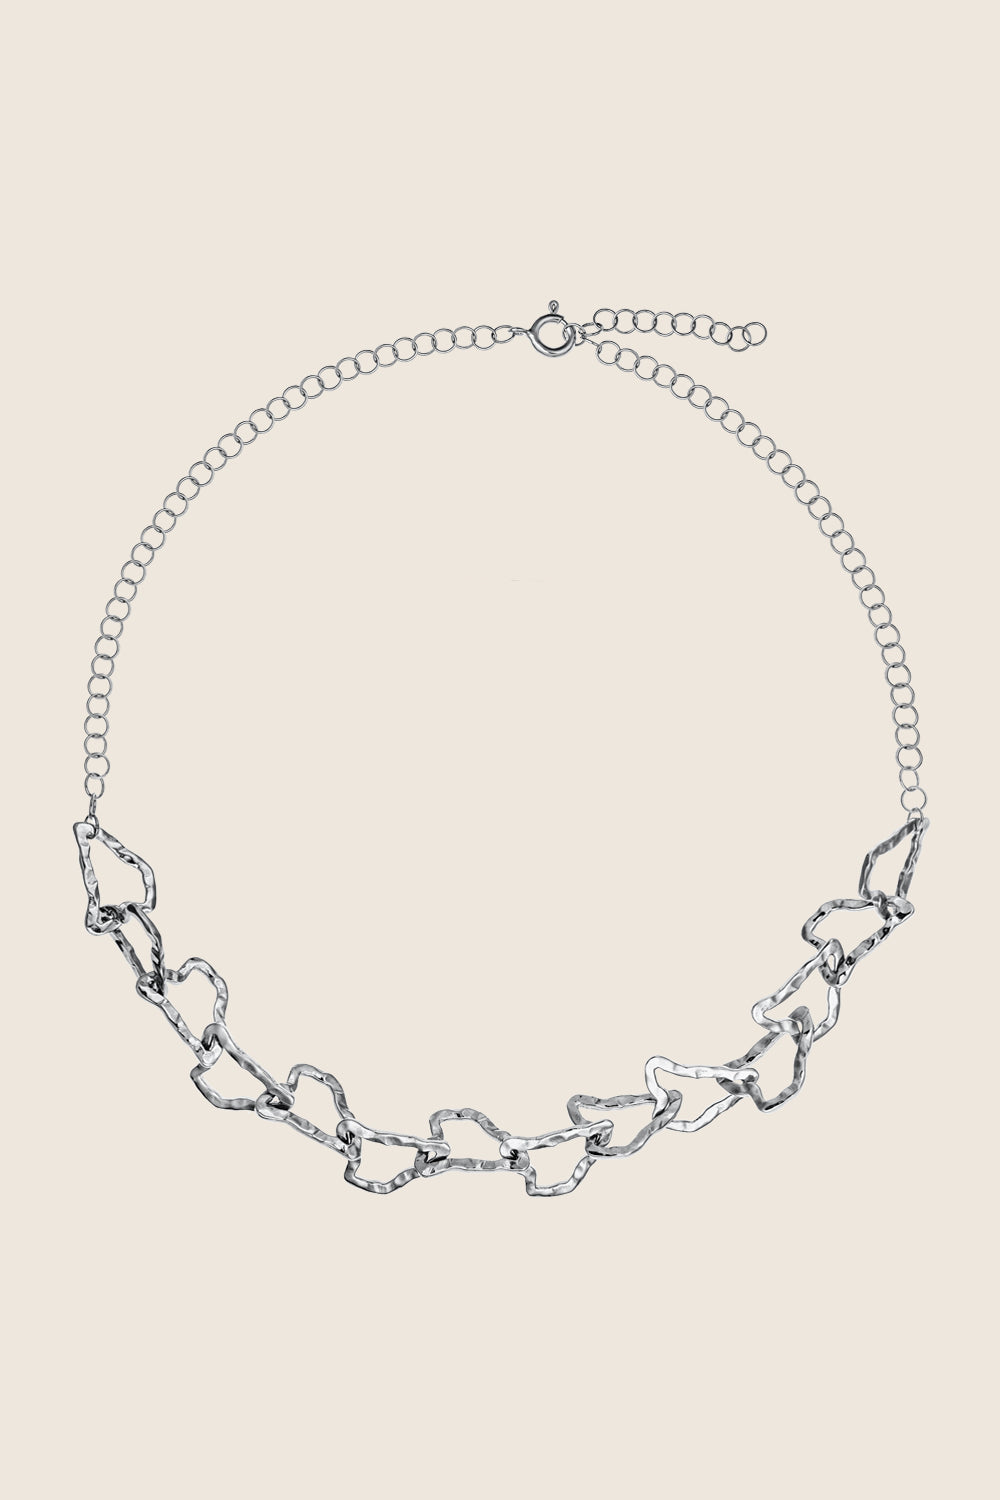 naszyjnik łańcuch srebro 925 DORSA kolekcja Capri biżuteria UMIAR